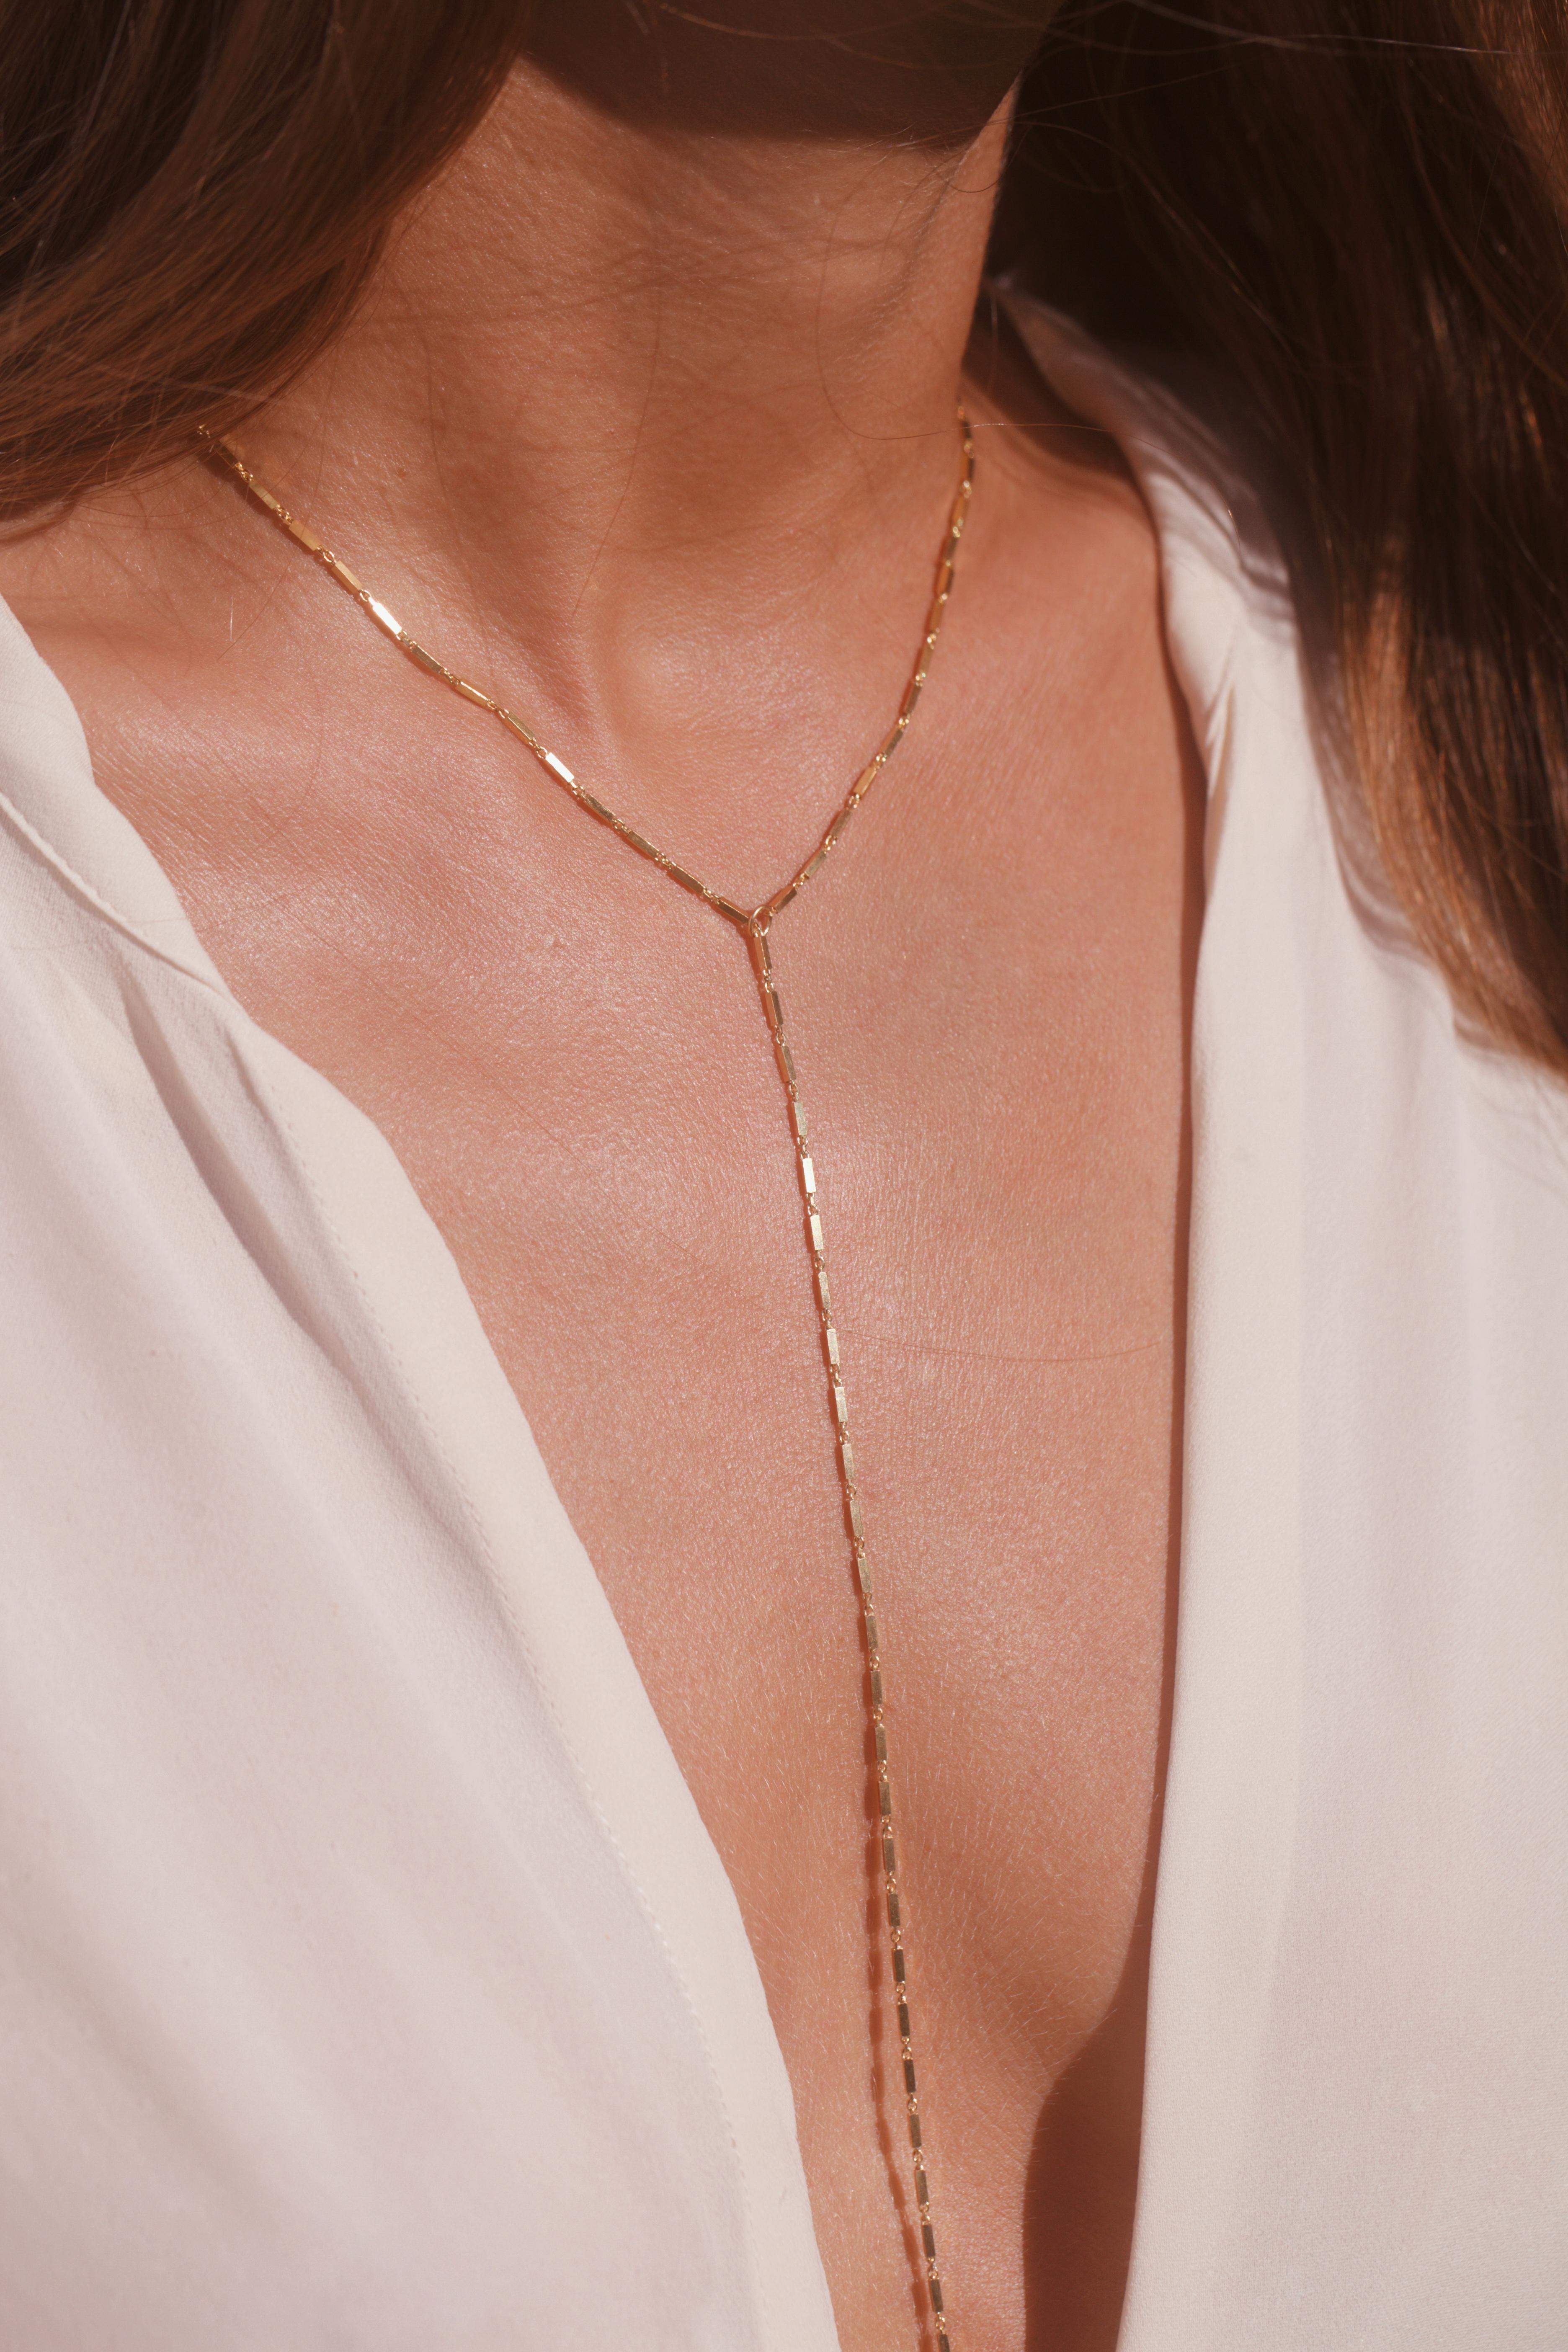 greek chain necklace